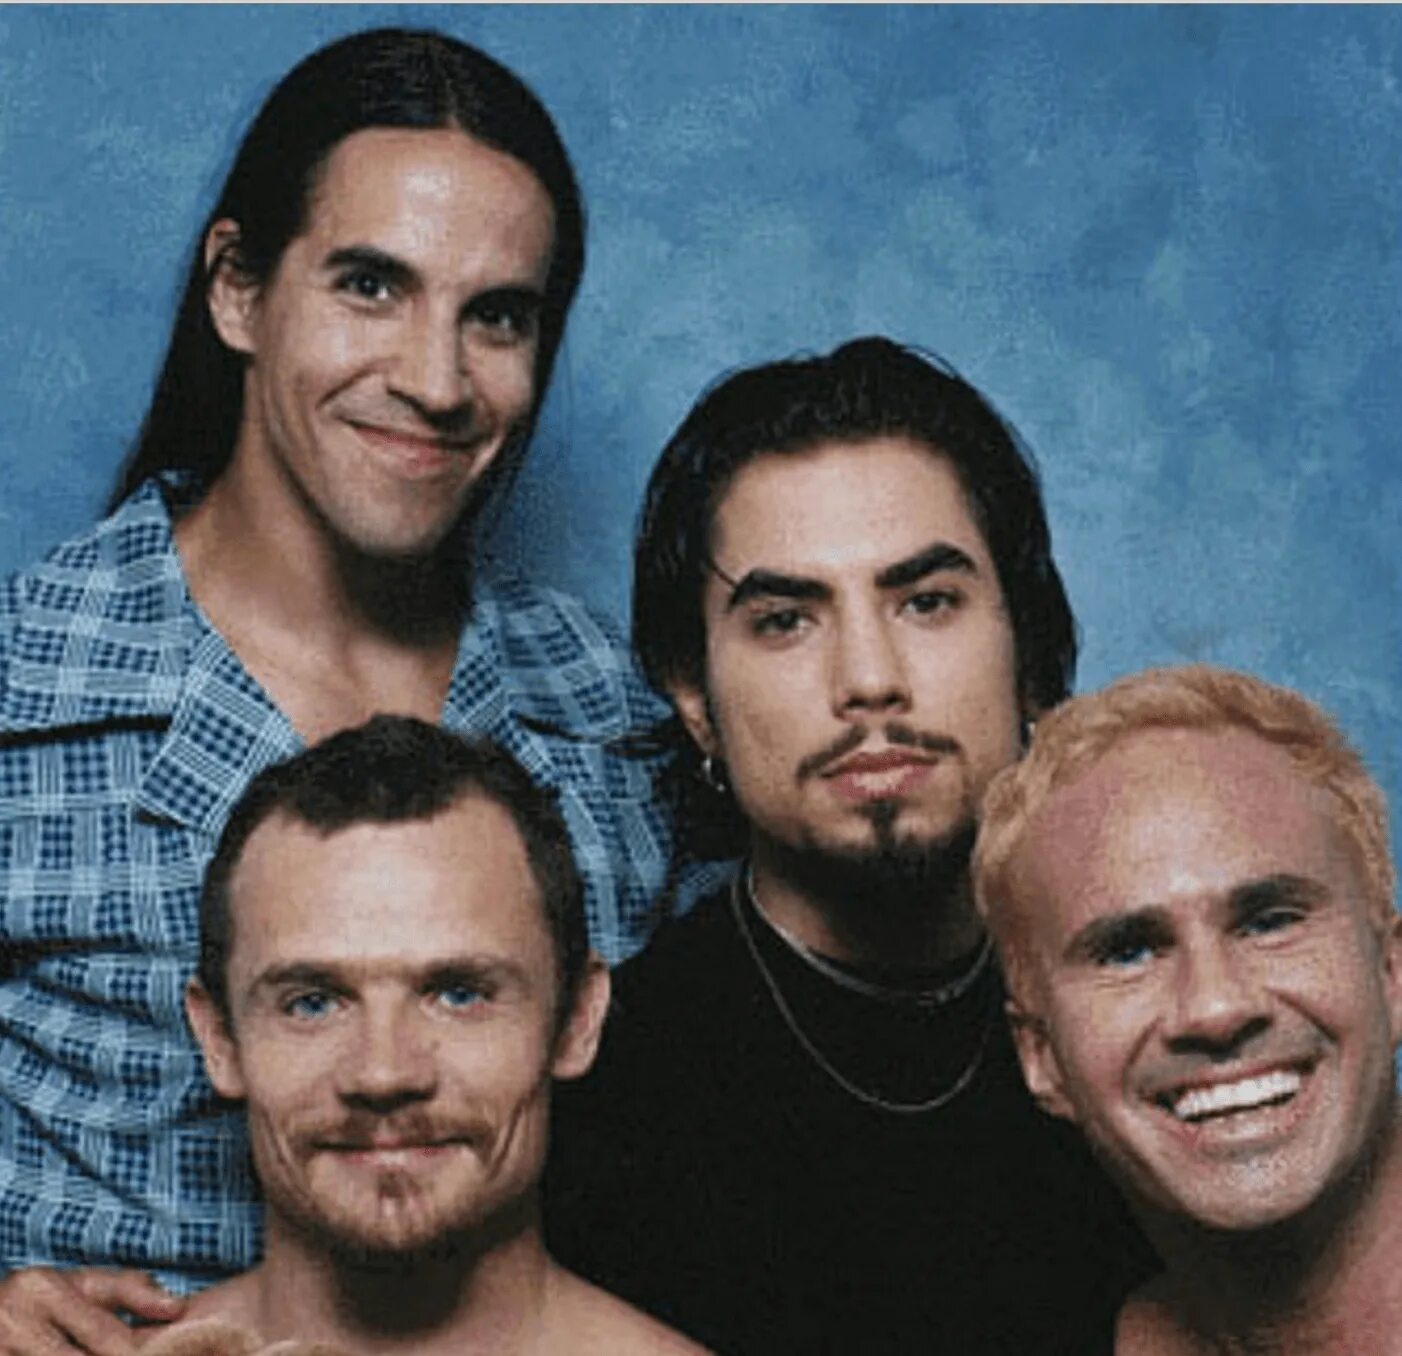 Red hot chili peppers википедия. Группа Red hot Chili Peppers. Группа ред хот Чили пеперс. RHCP 1989. Солист Чили пеперс.